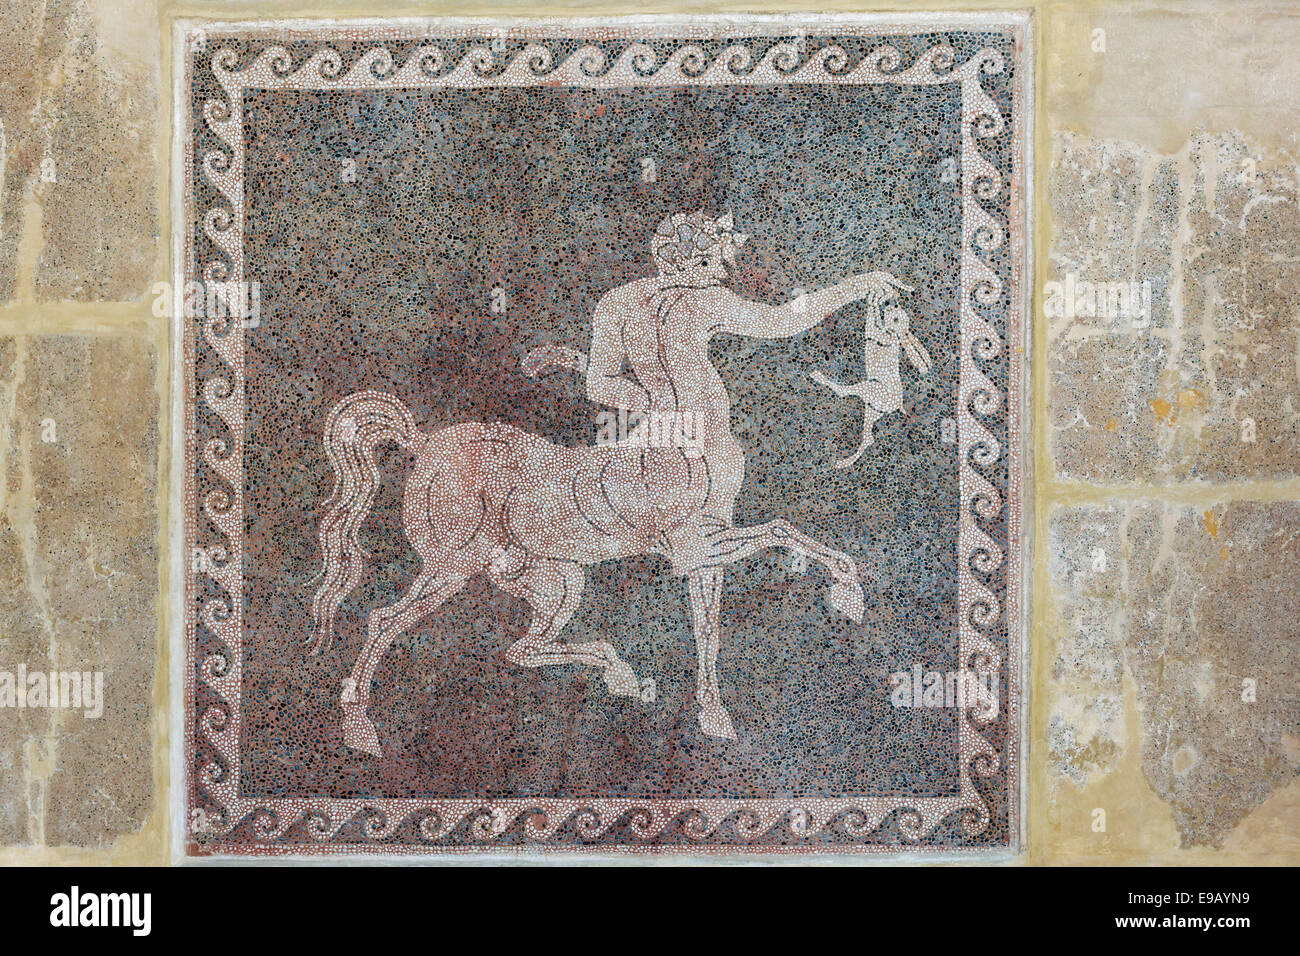 Centaur holding a slain rabbit, floor mosaic made of pebbles, Chochlaki, Archaeological Museum, historic town centre, Rhodes Stock Photo